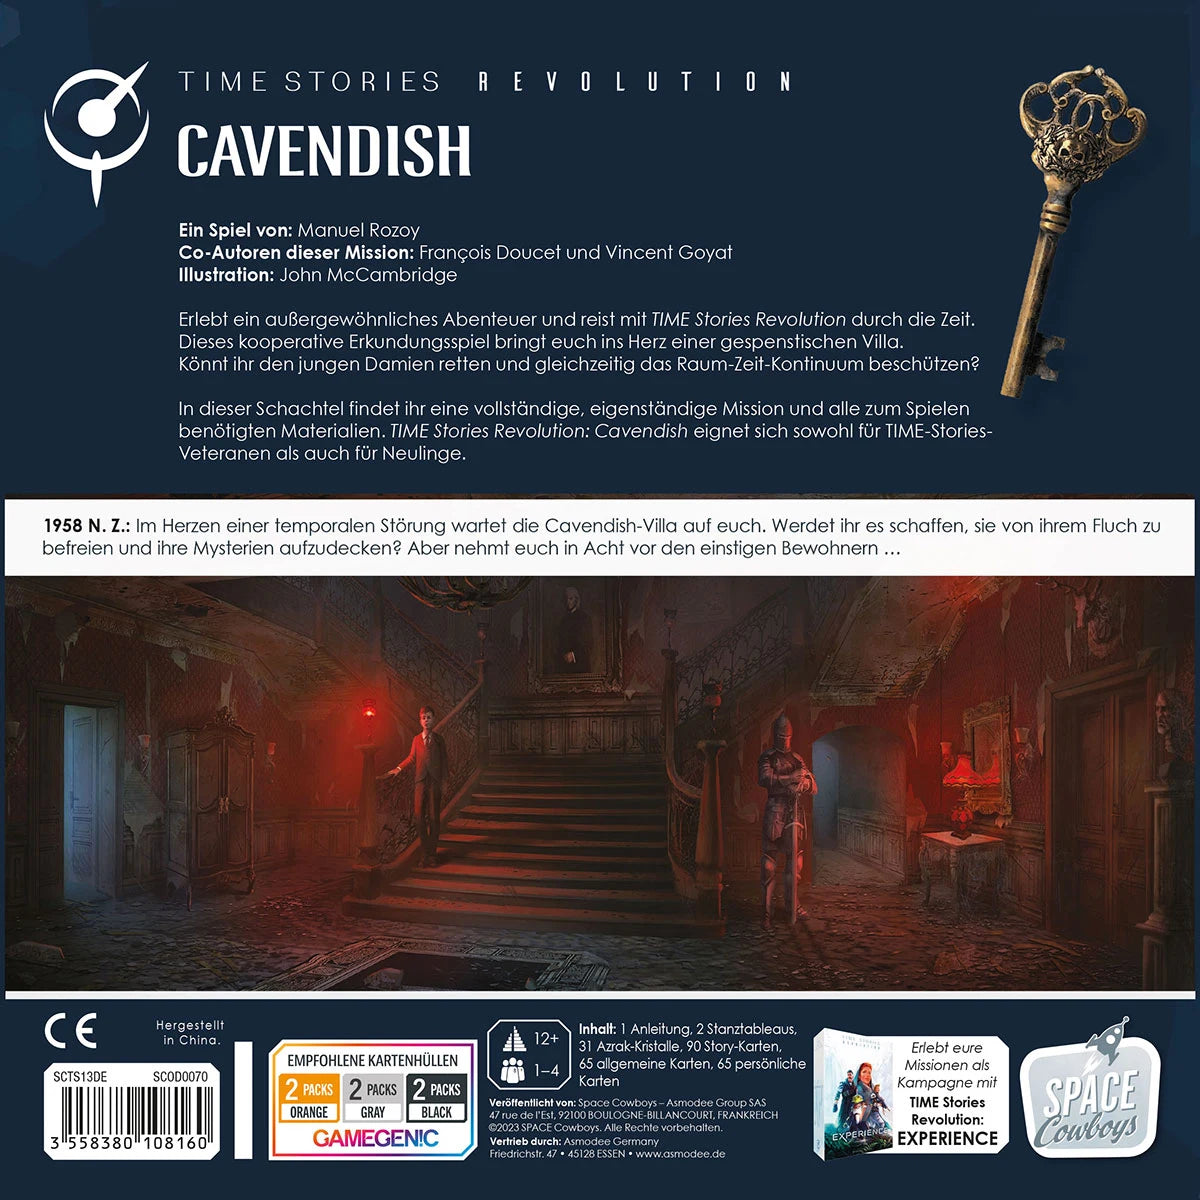 TIME Stories Revolution - Cavendish